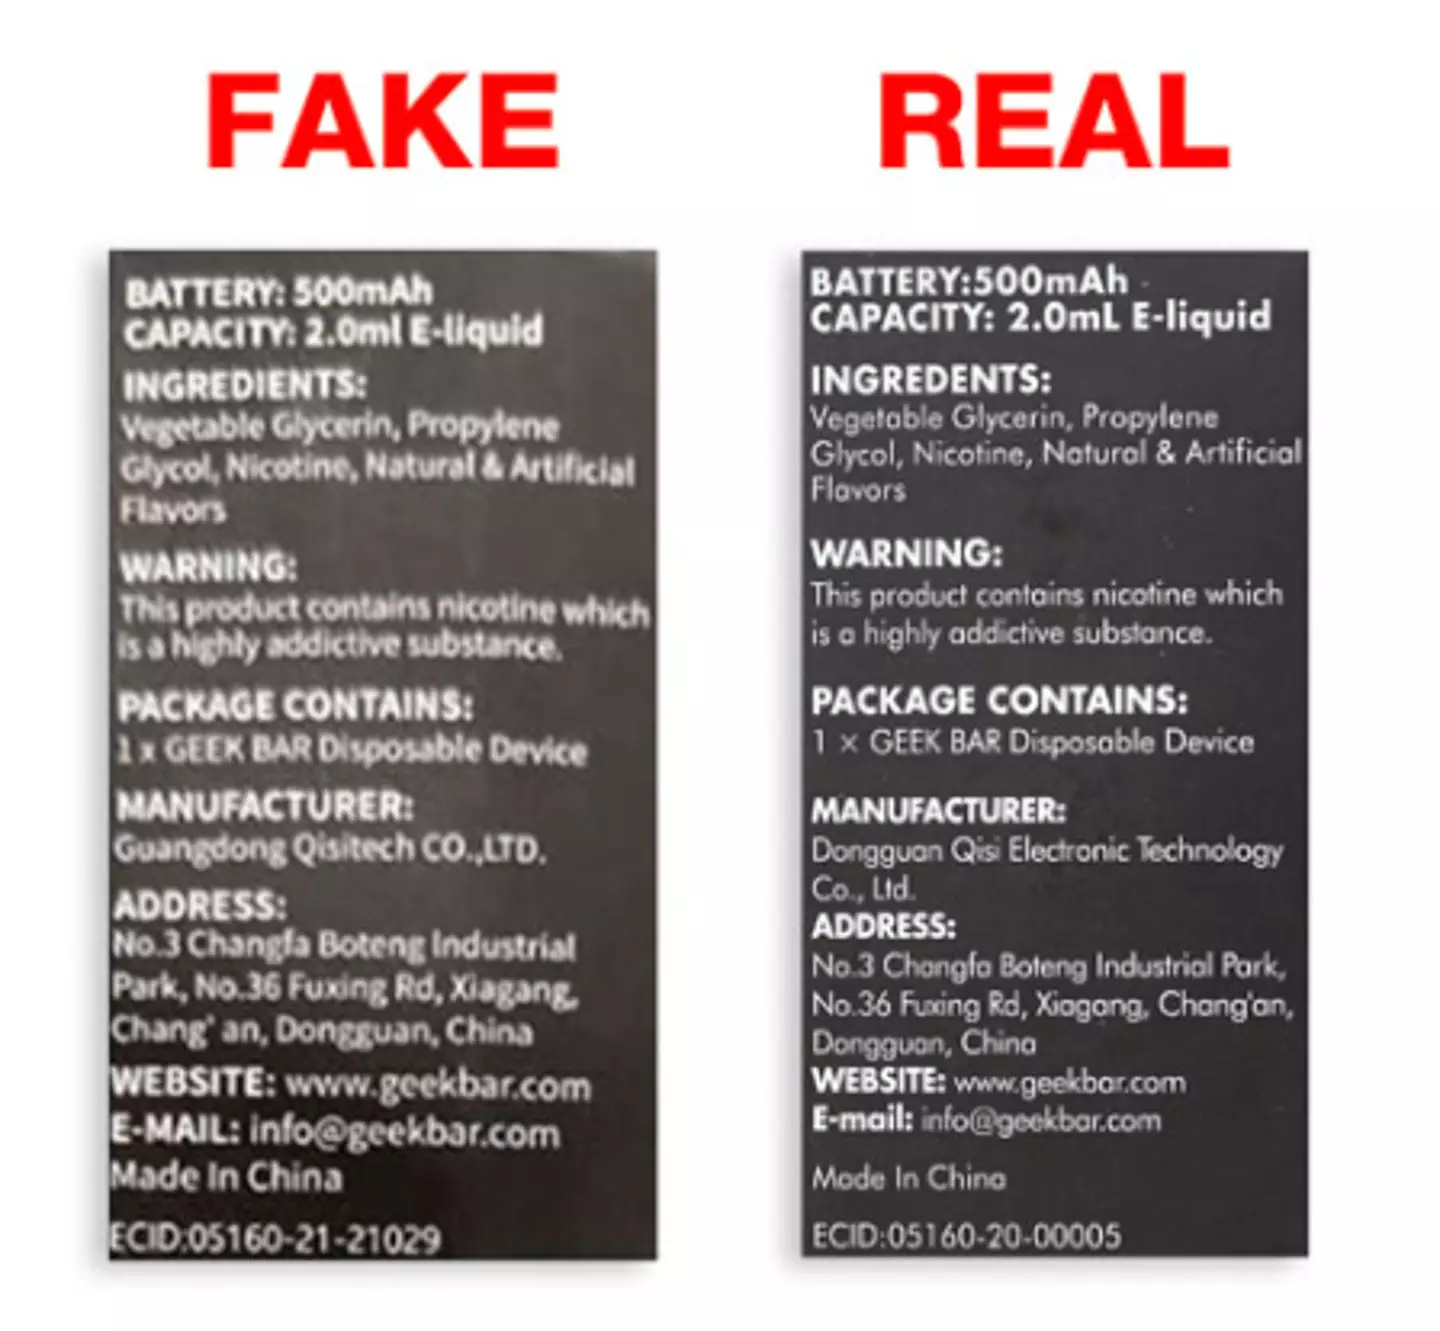 A fake vs real manufacturer detail box.